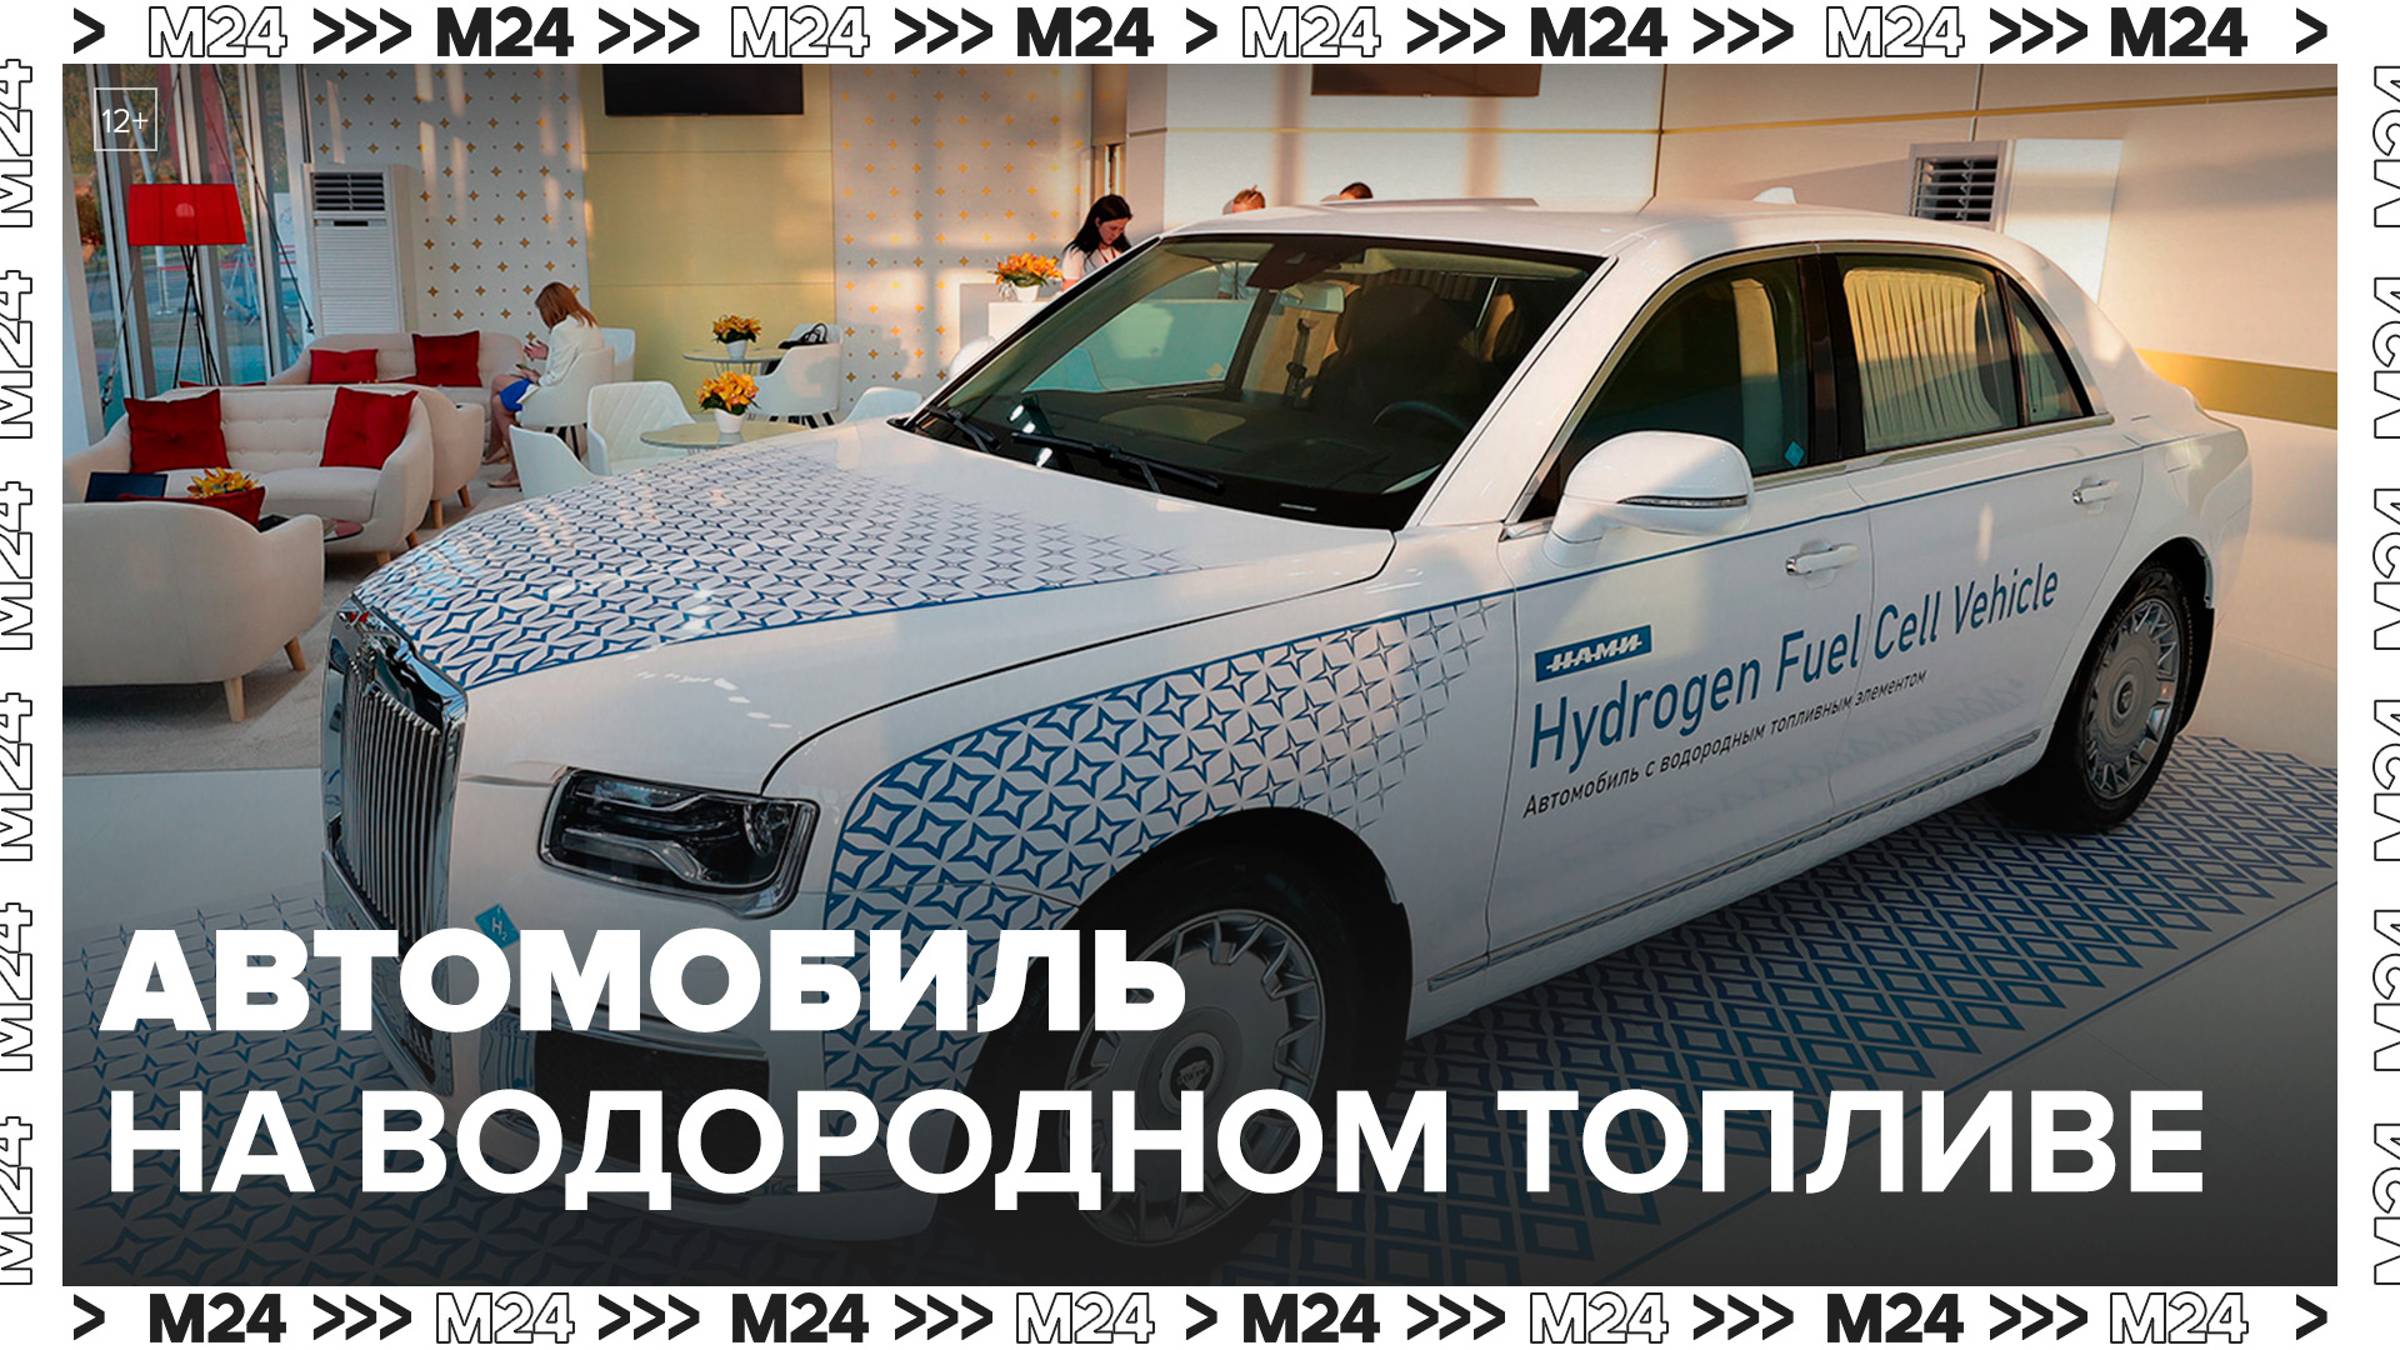 "Техно": российский бренд представил автомобиль, работающий на водородном топливе - Москва 24